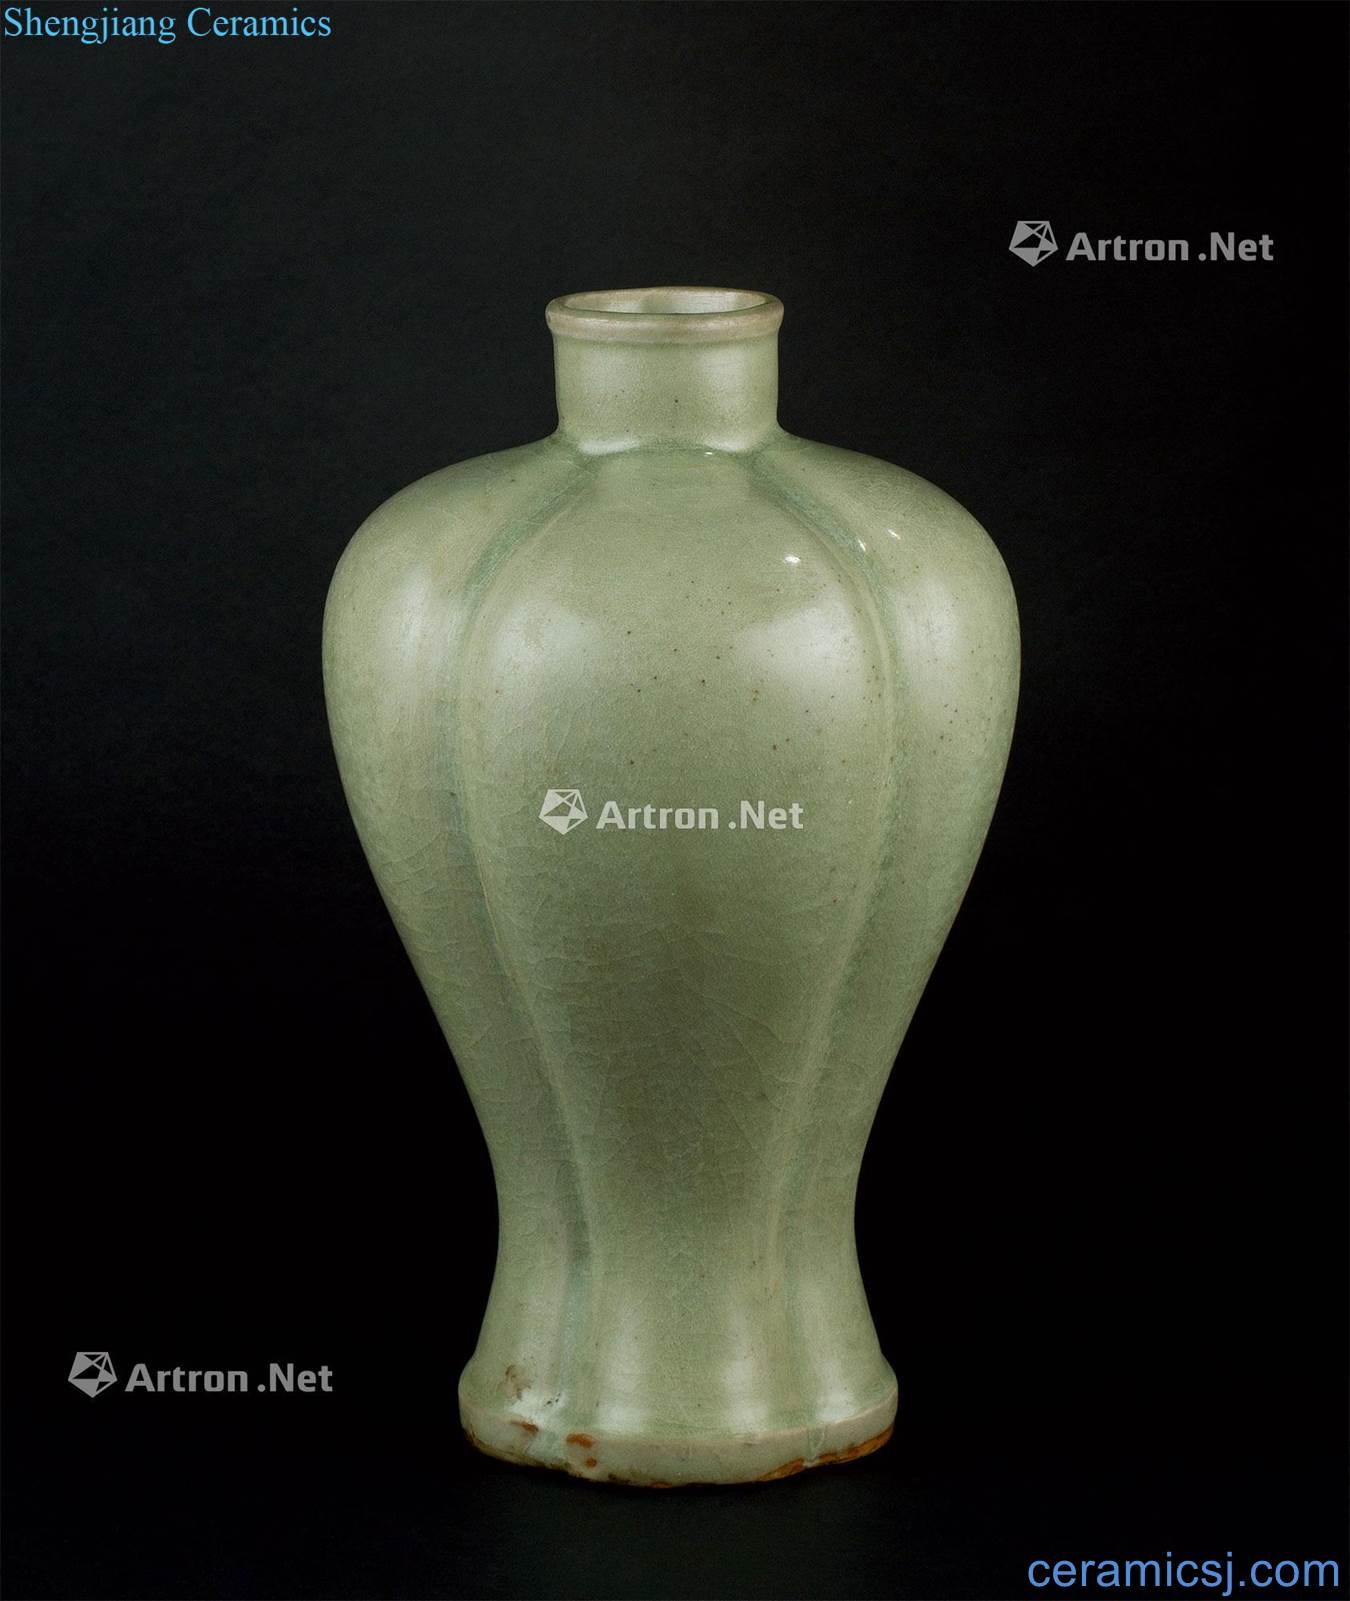 The yuan dynasty to Ming dynasty (1279 ~ 1644) celadon melon leng bottles